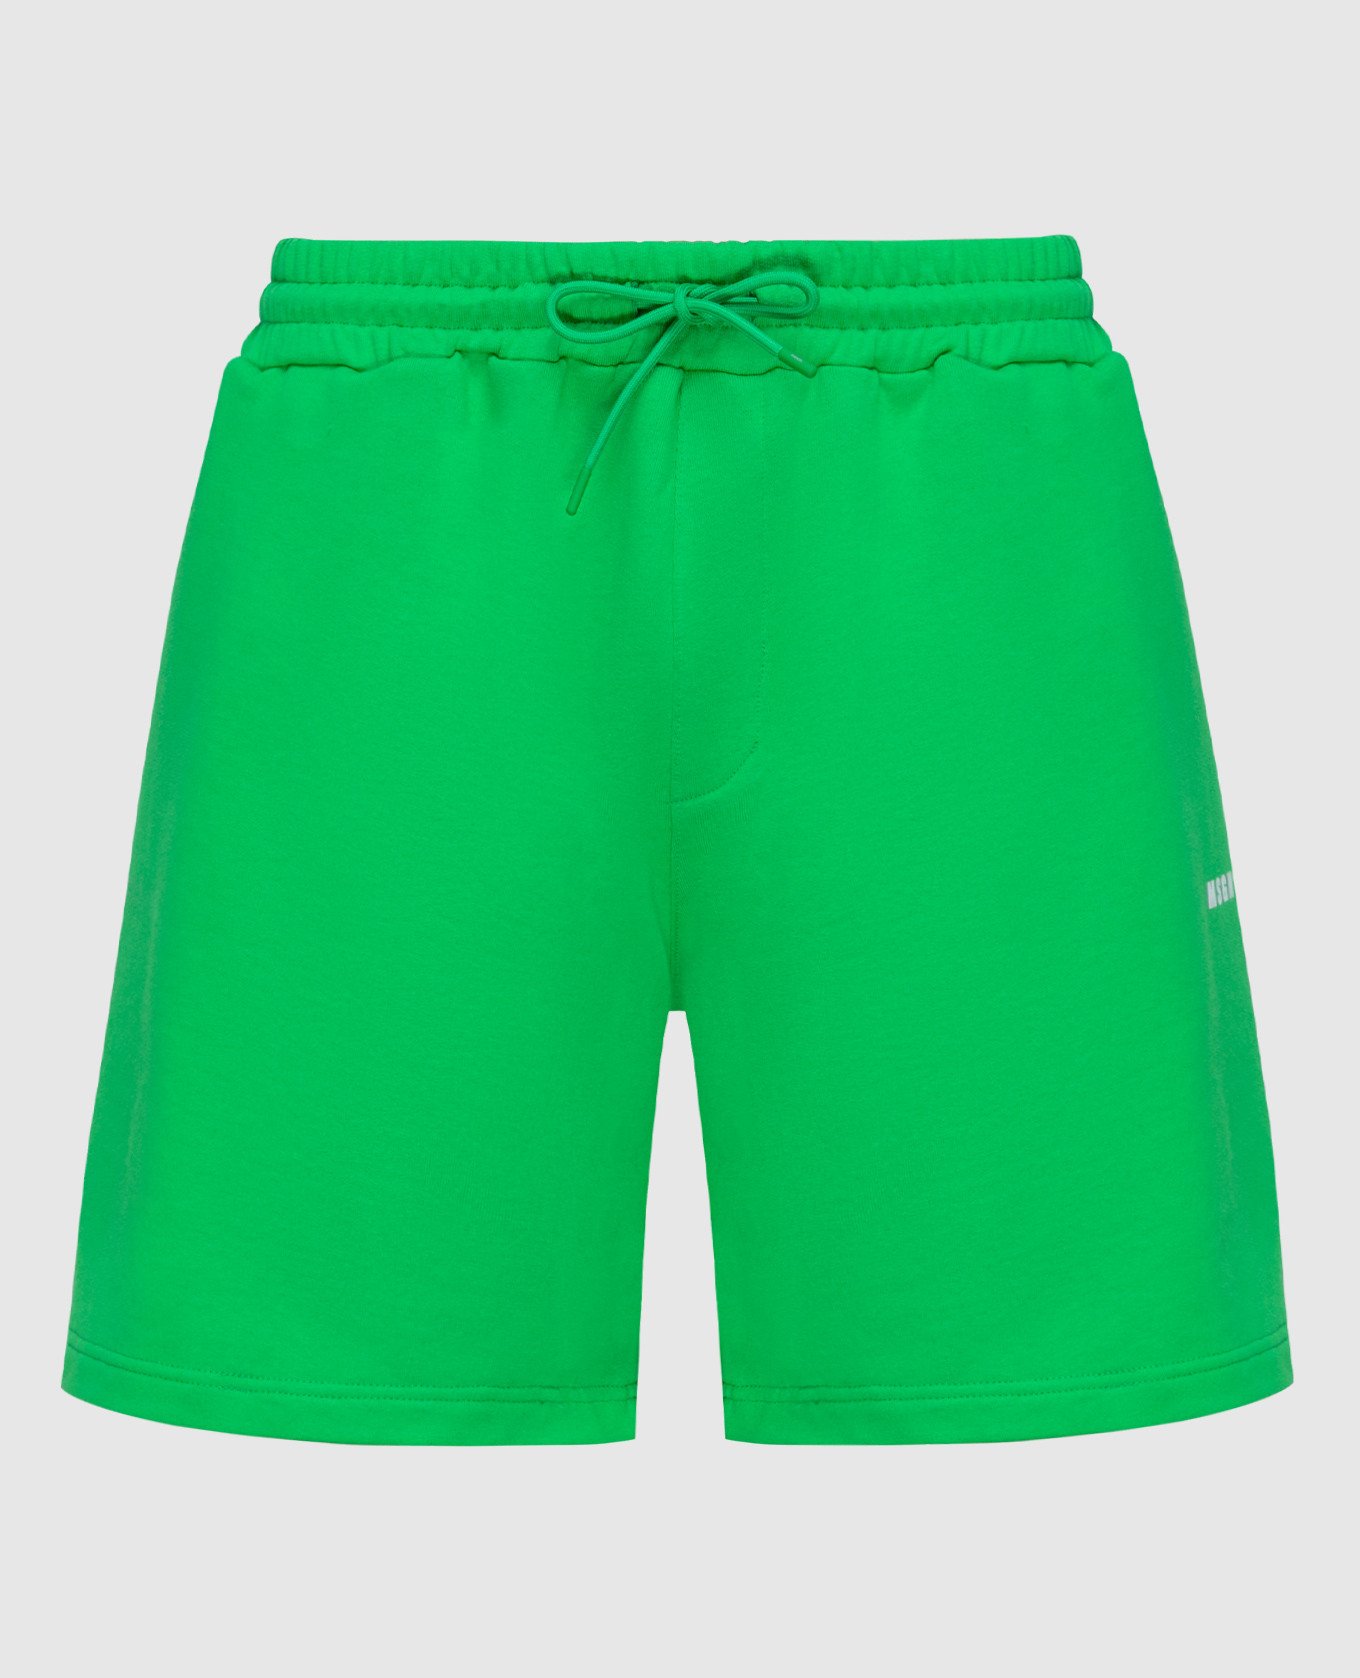 Green shorts with logo print